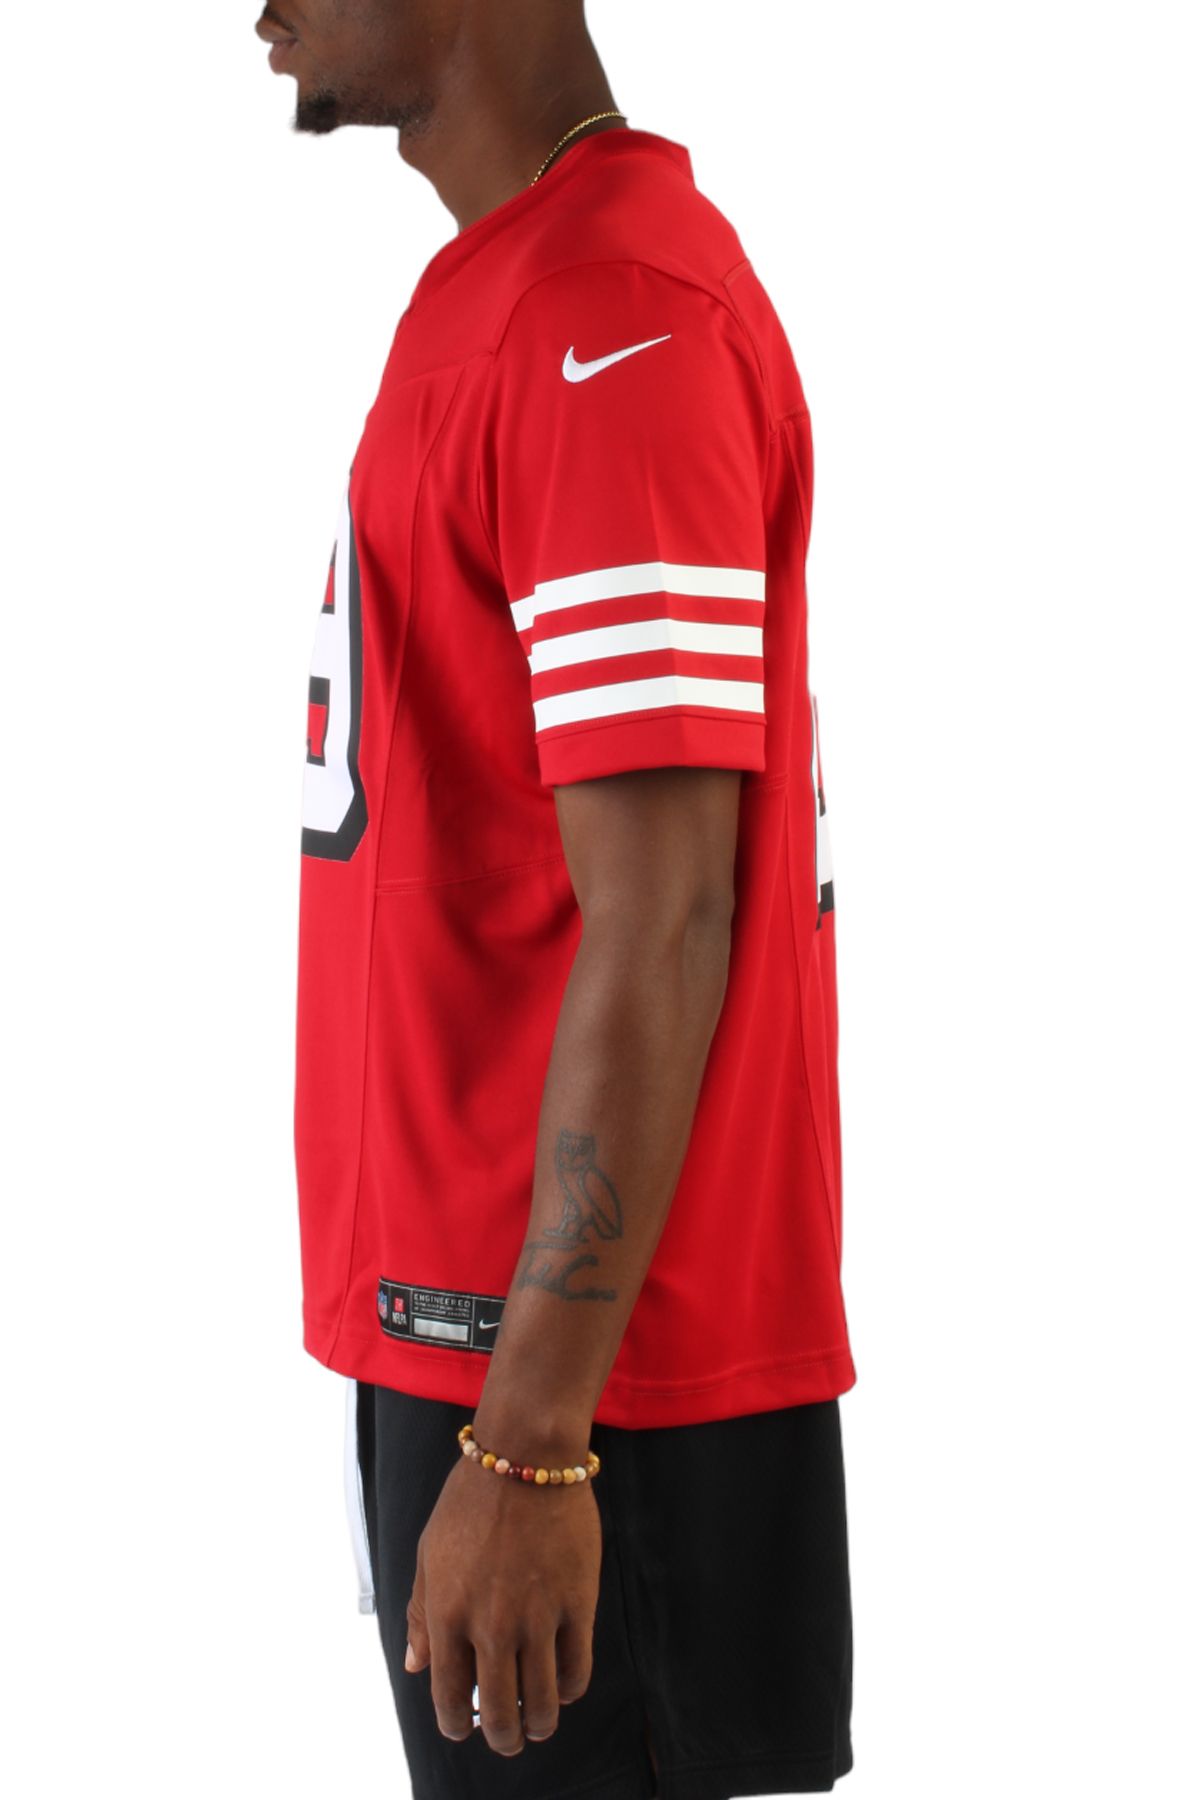 Matthew Stafford Los Angeles Rams Nike Men's Dri-Fit NFL Limited Football Jersey in White, Size: Medium | 31NMLRLA95F-8Y0